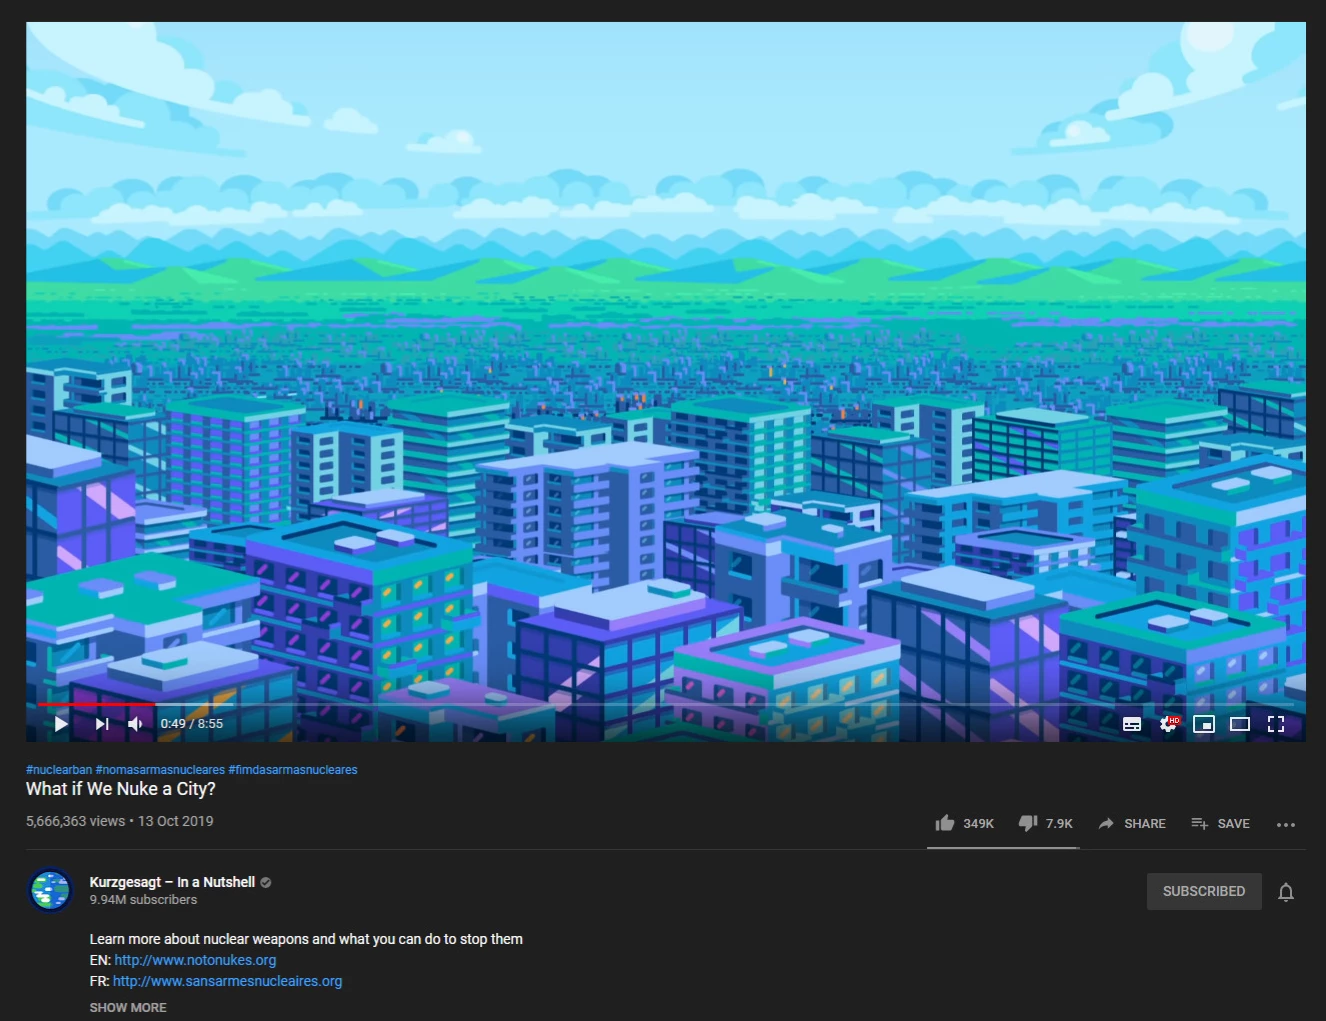 A Kurzgesagt video titled "What if We Nuke a City?"